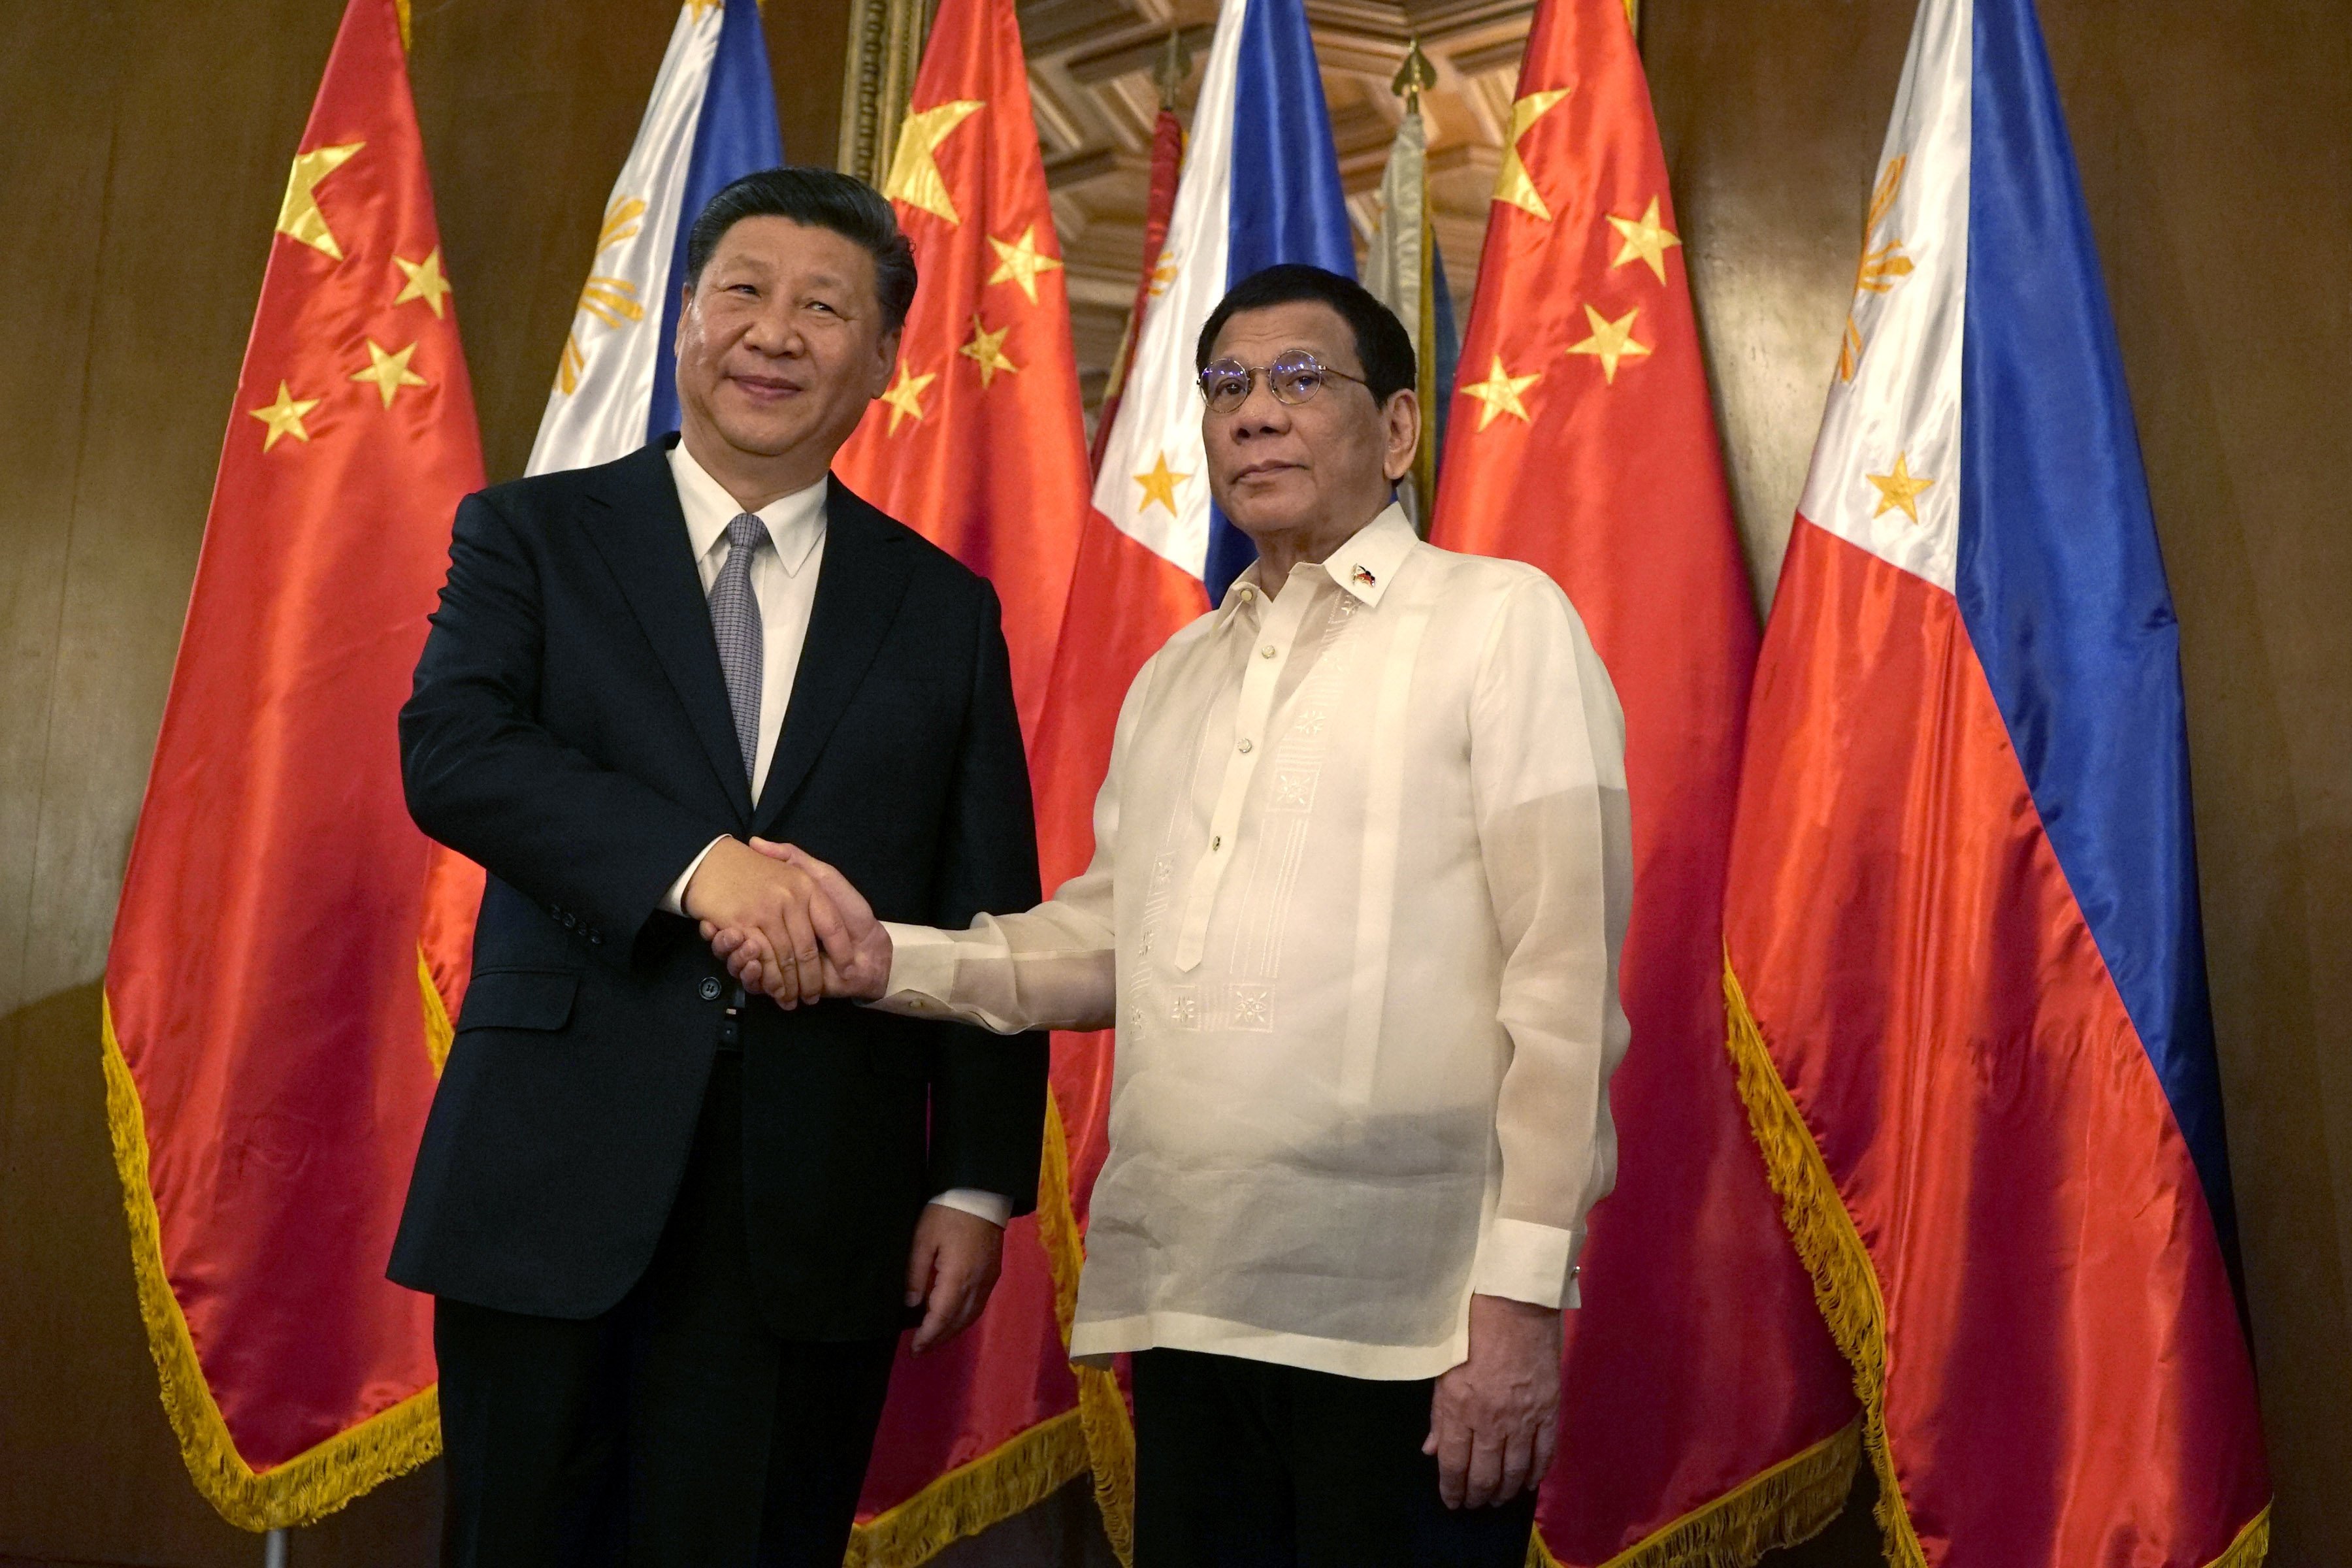 Philippine President Rodrigo Duterte and President Xi Jinping of China at the Malacañang Palace in Manila on November 20, 2018. Photo: Malacañang